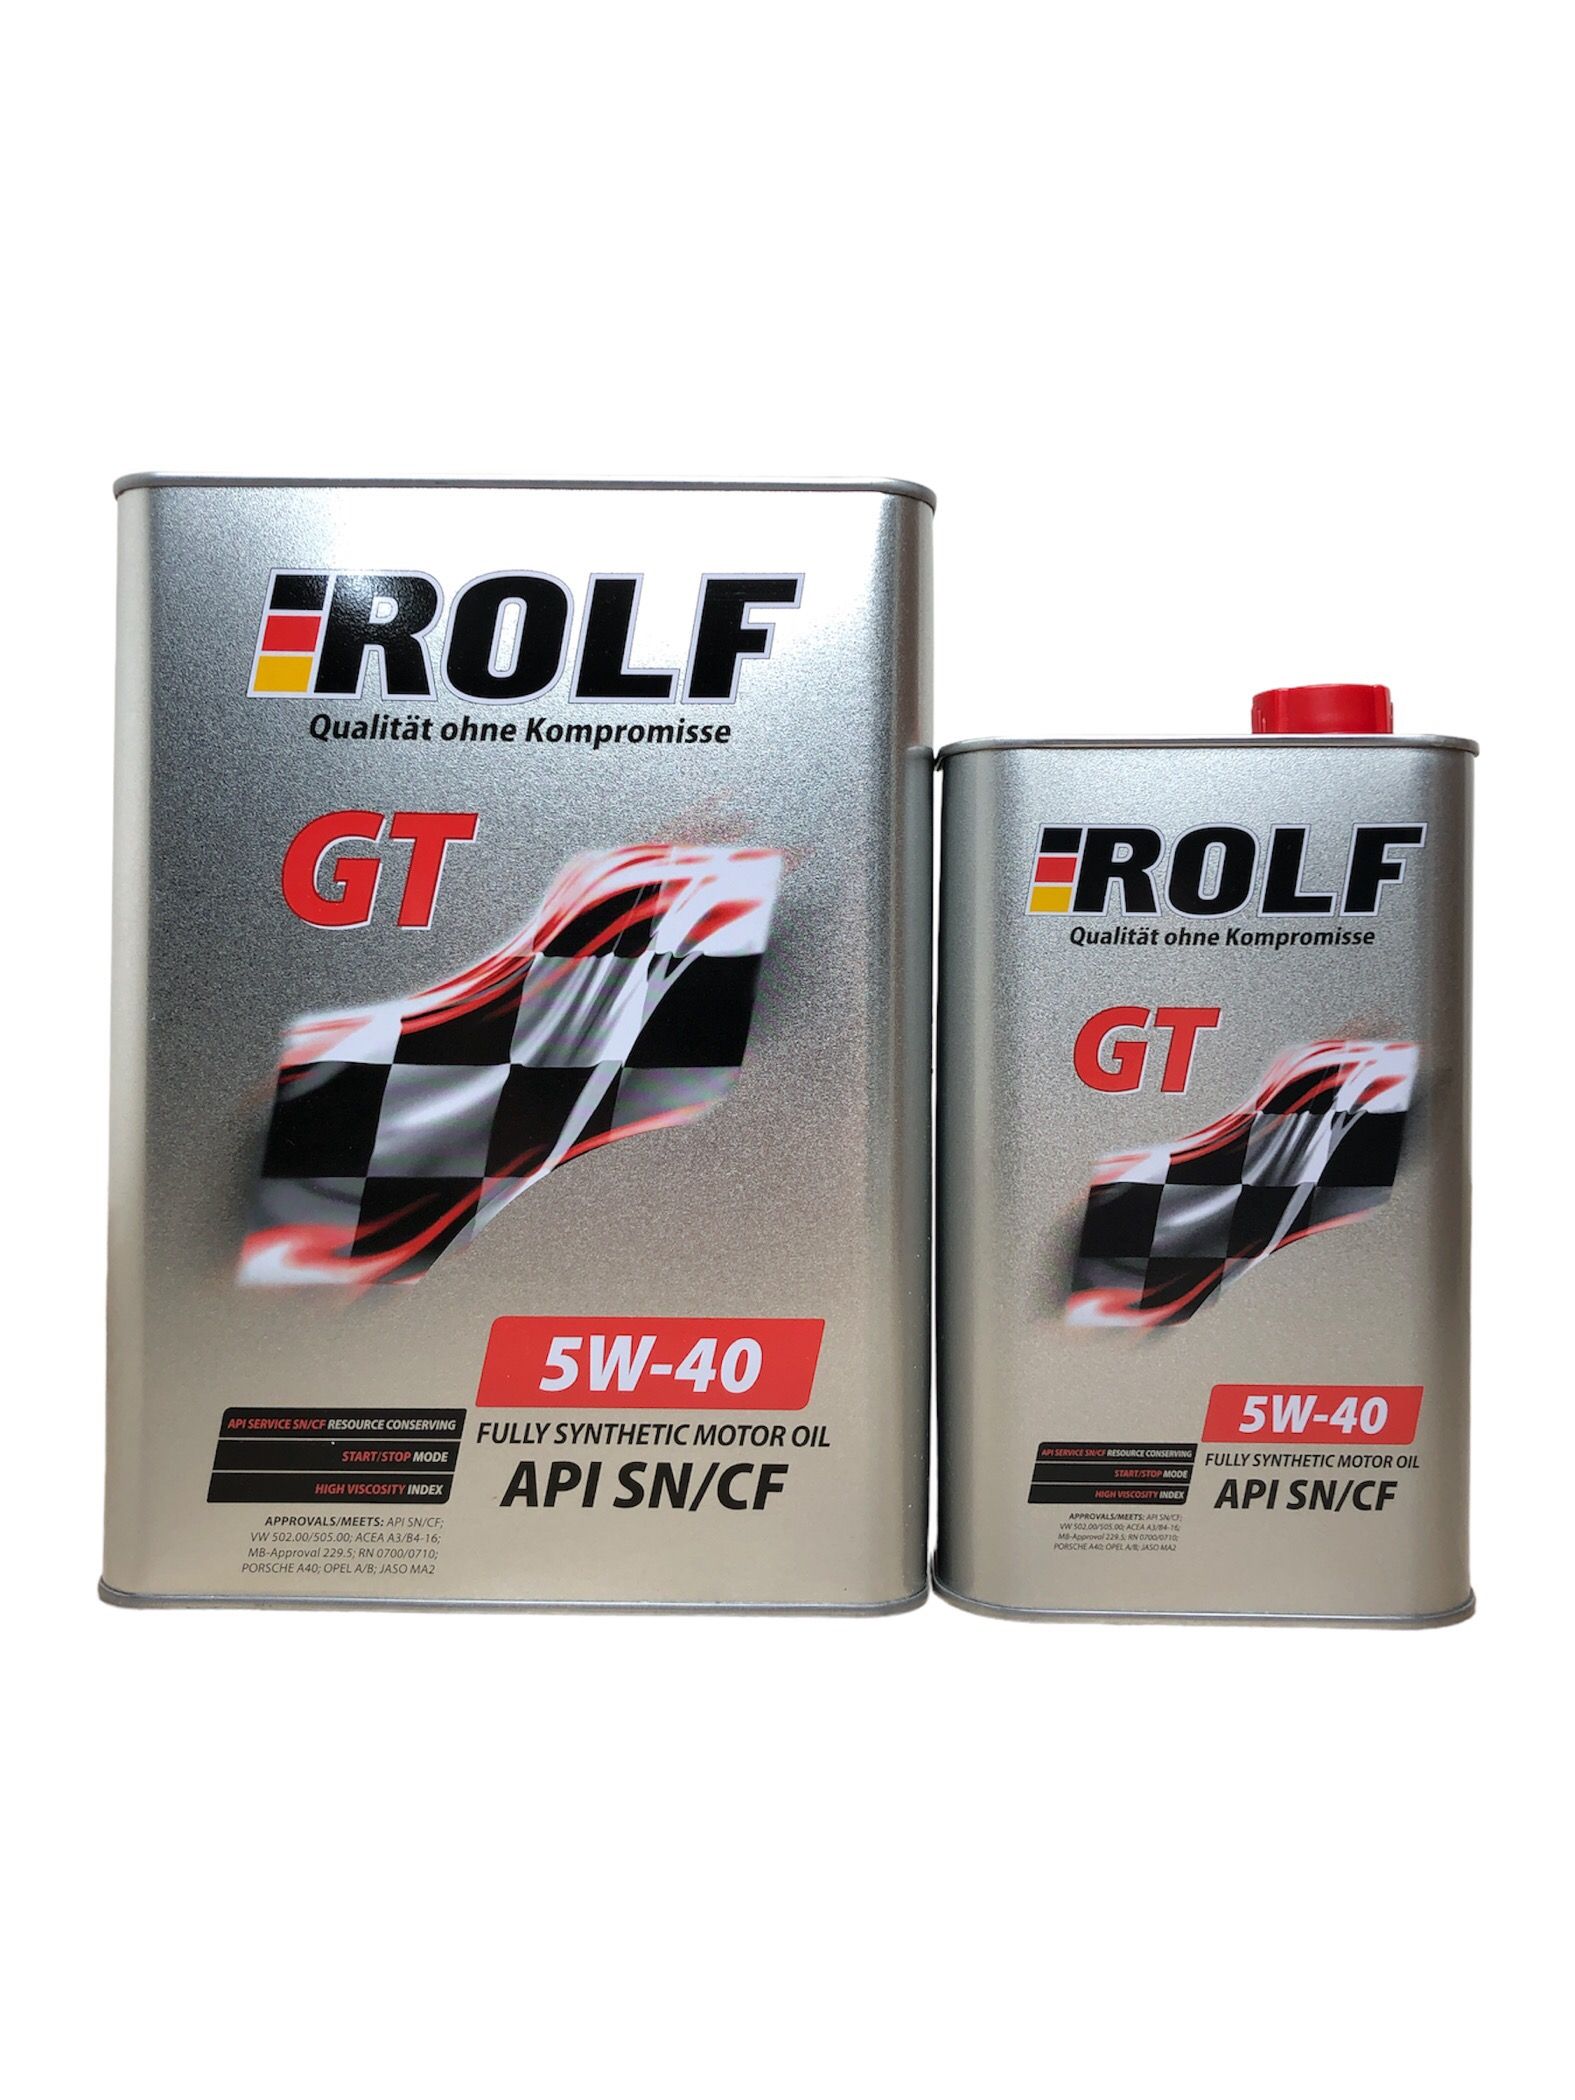 Масло rolf gt 5w 40. Rolf масло моторное 5w40 gt API SN CF 1l. Rolf gt 5w-40. Rolf gt 5w-40 SN/CF.